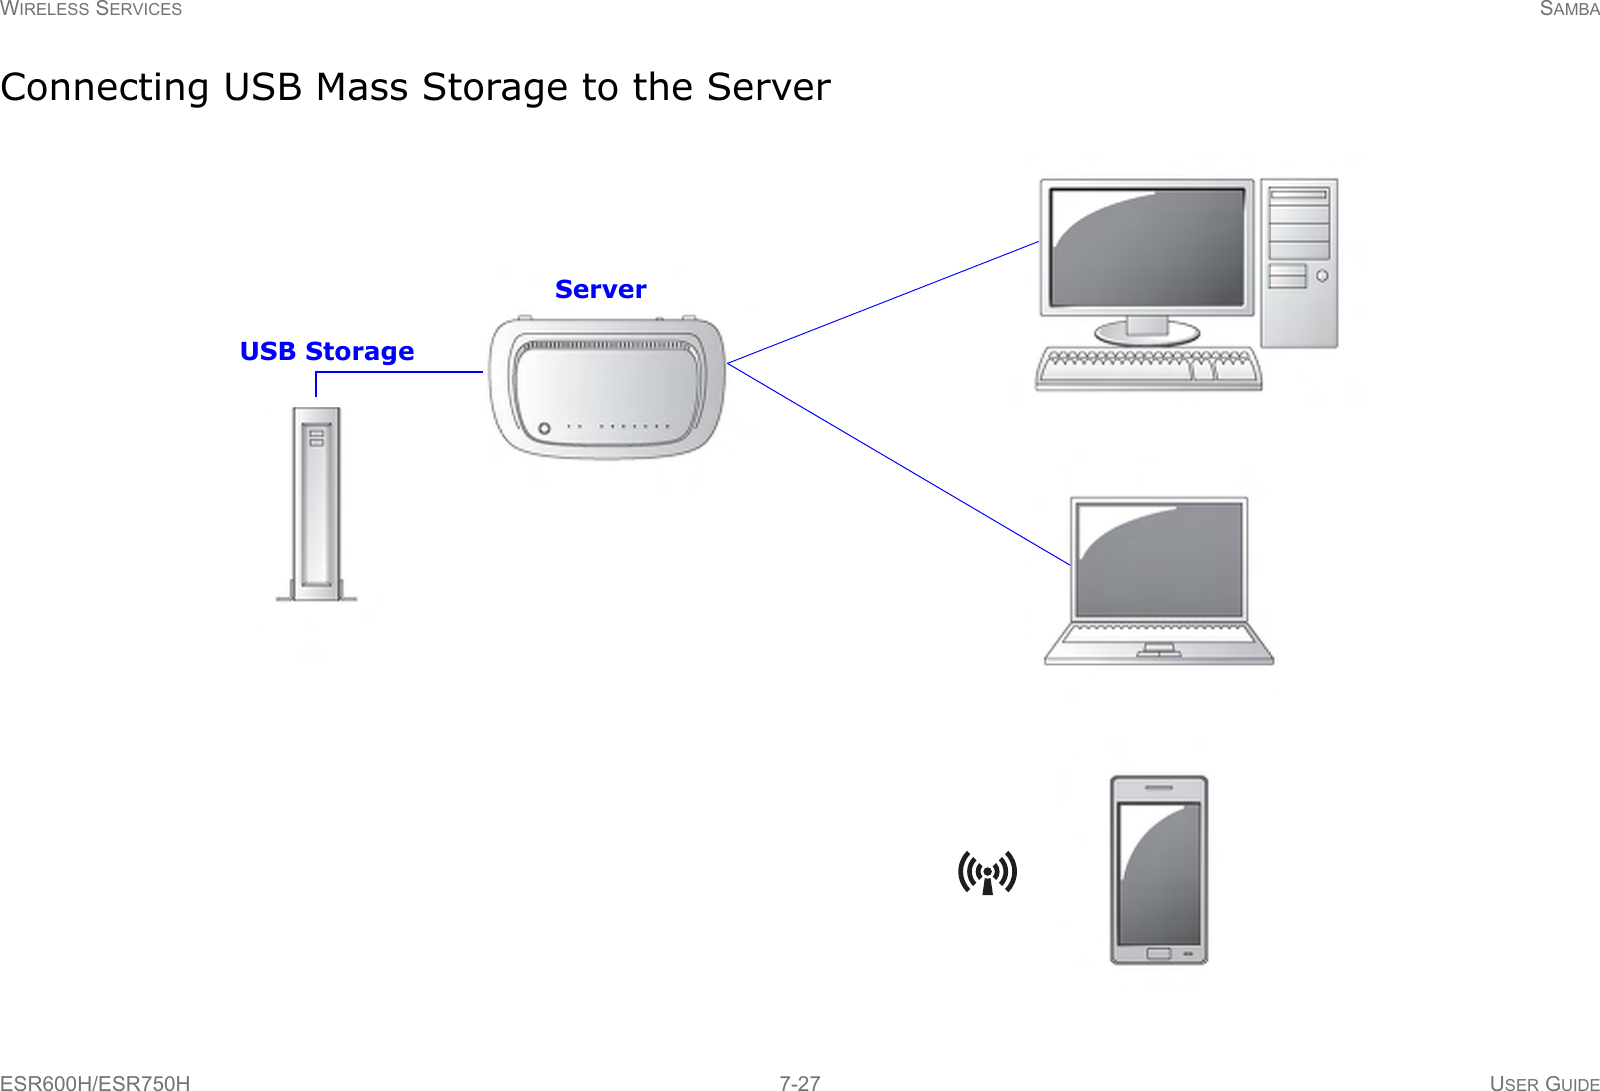 WIRELESS SERVICES SAMBAESR600H/ESR750H 7-27 USER GUIDEConnecting USB Mass Storage to the ServerUSB StorageServer